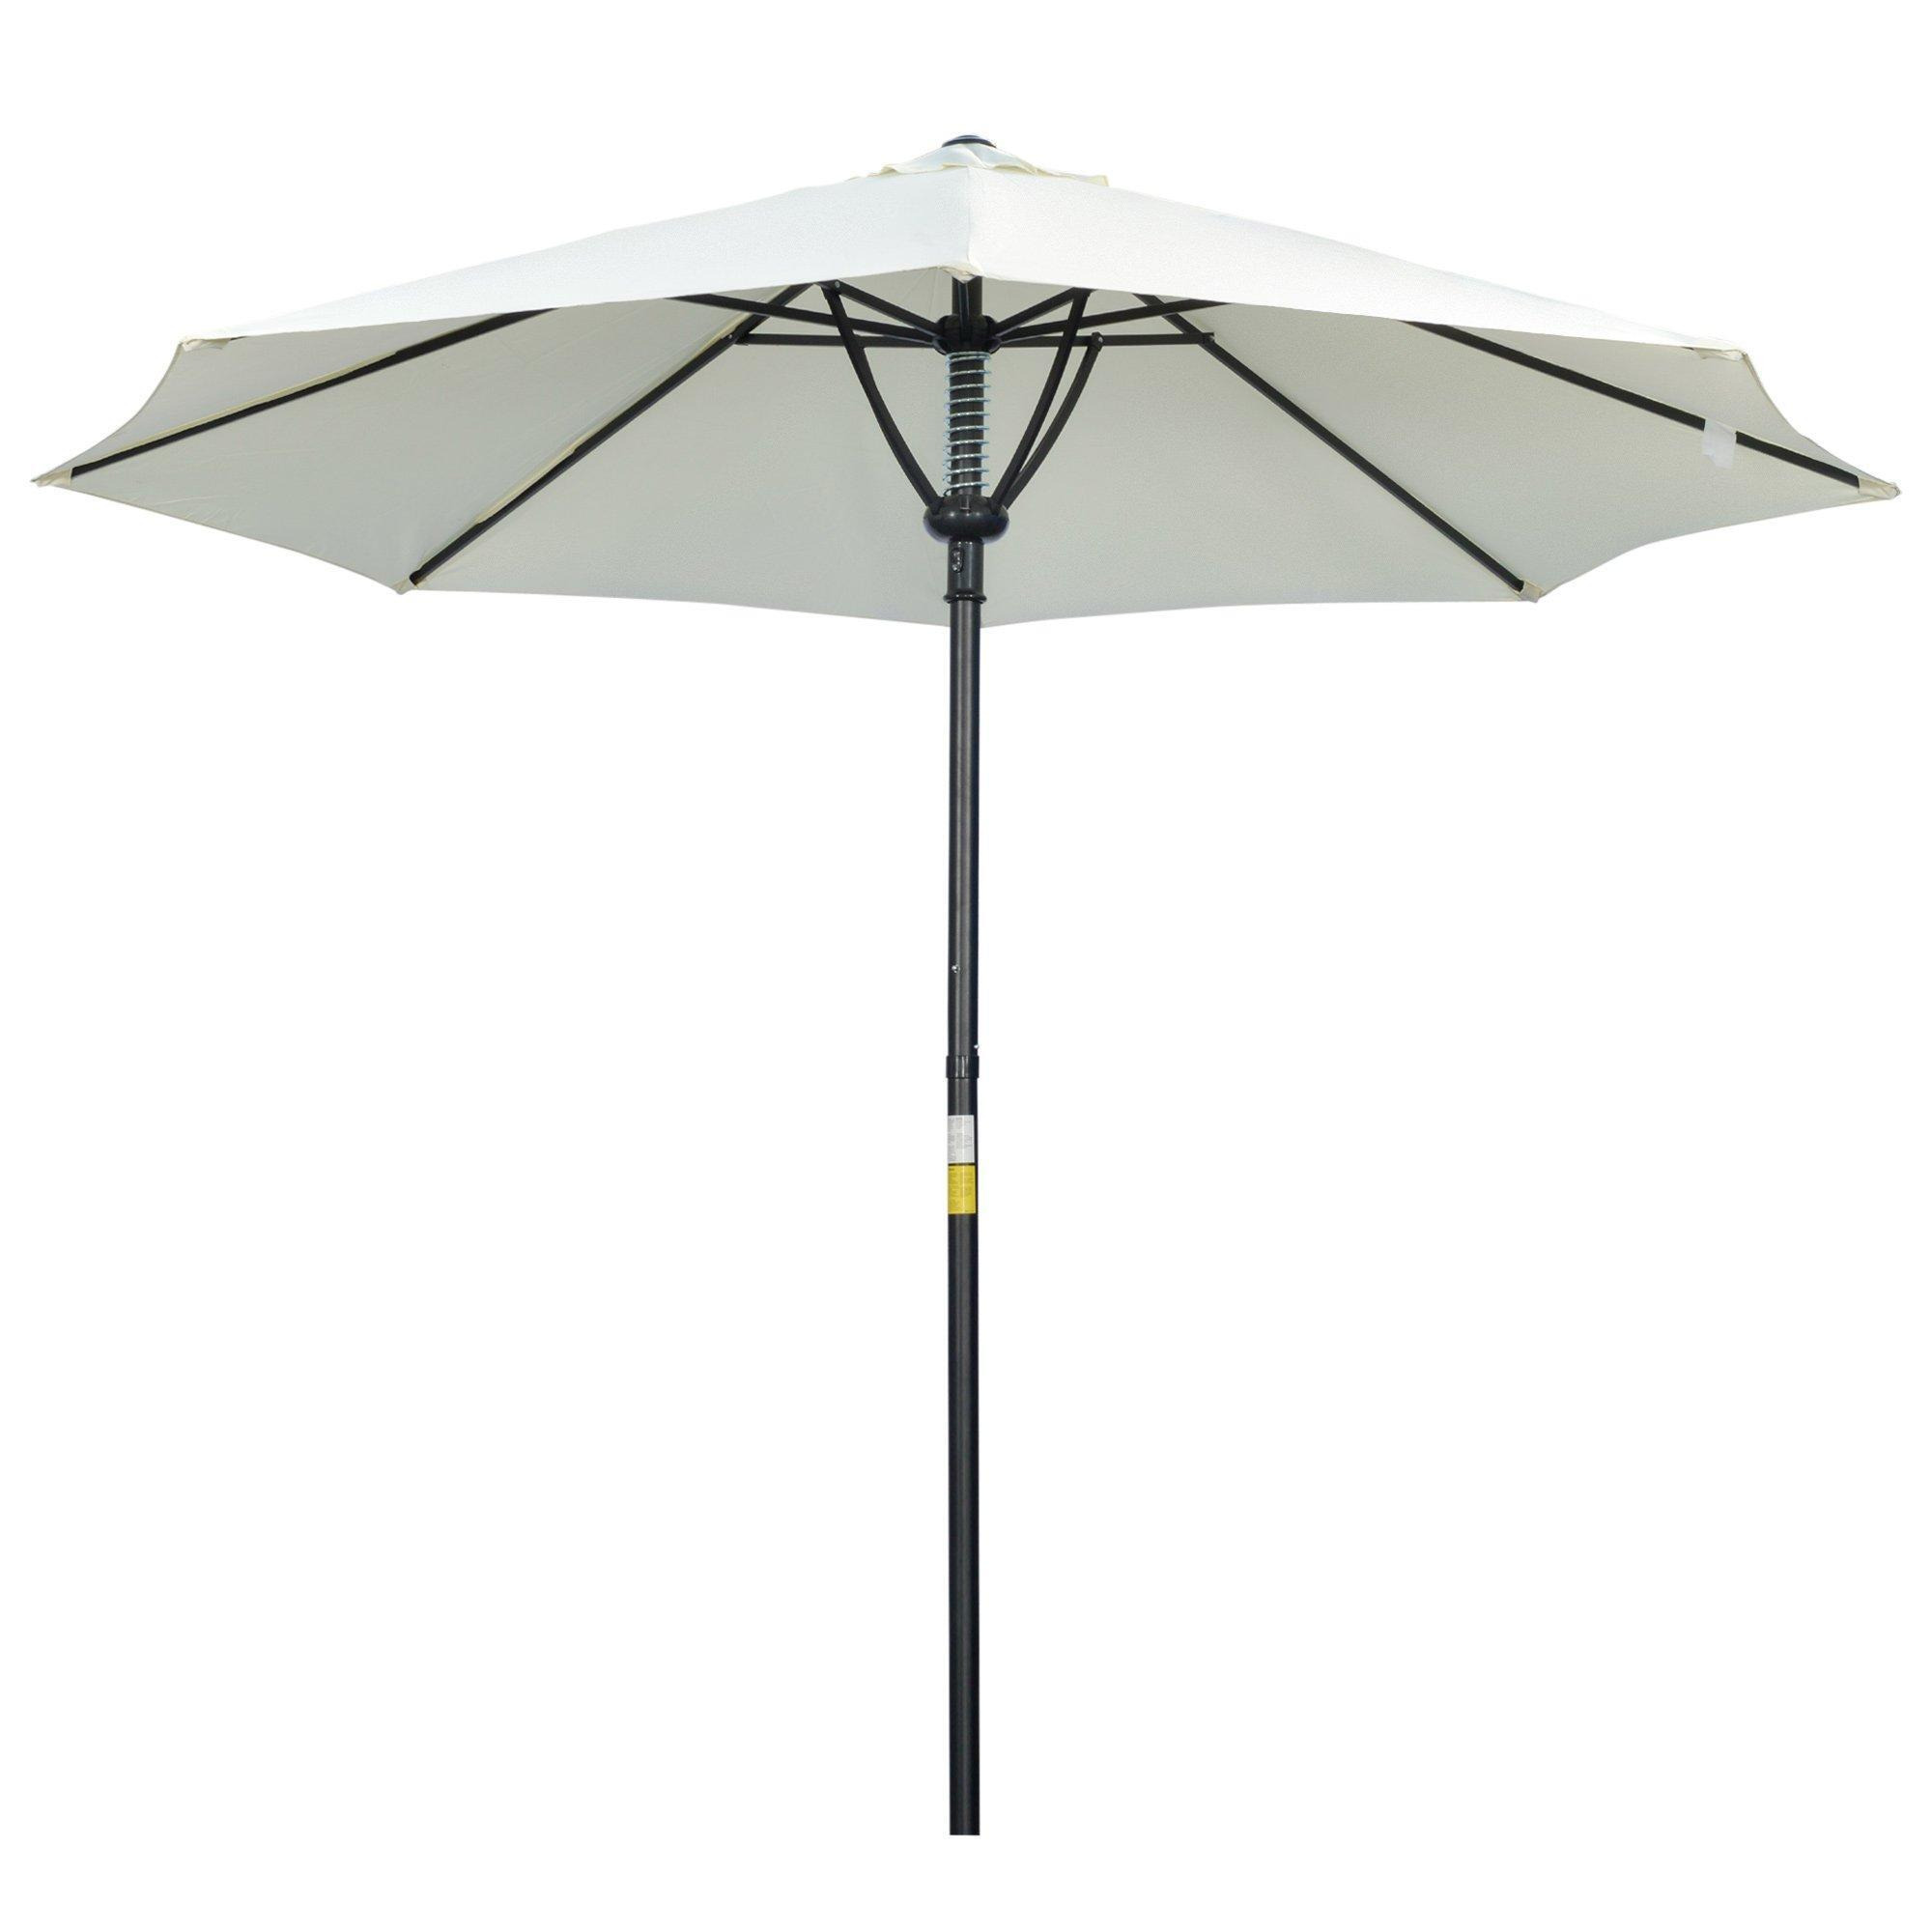 Outdoor Market Table 3Metre Parasol Umbrella Sun Shade with 8 Ribs - image 1